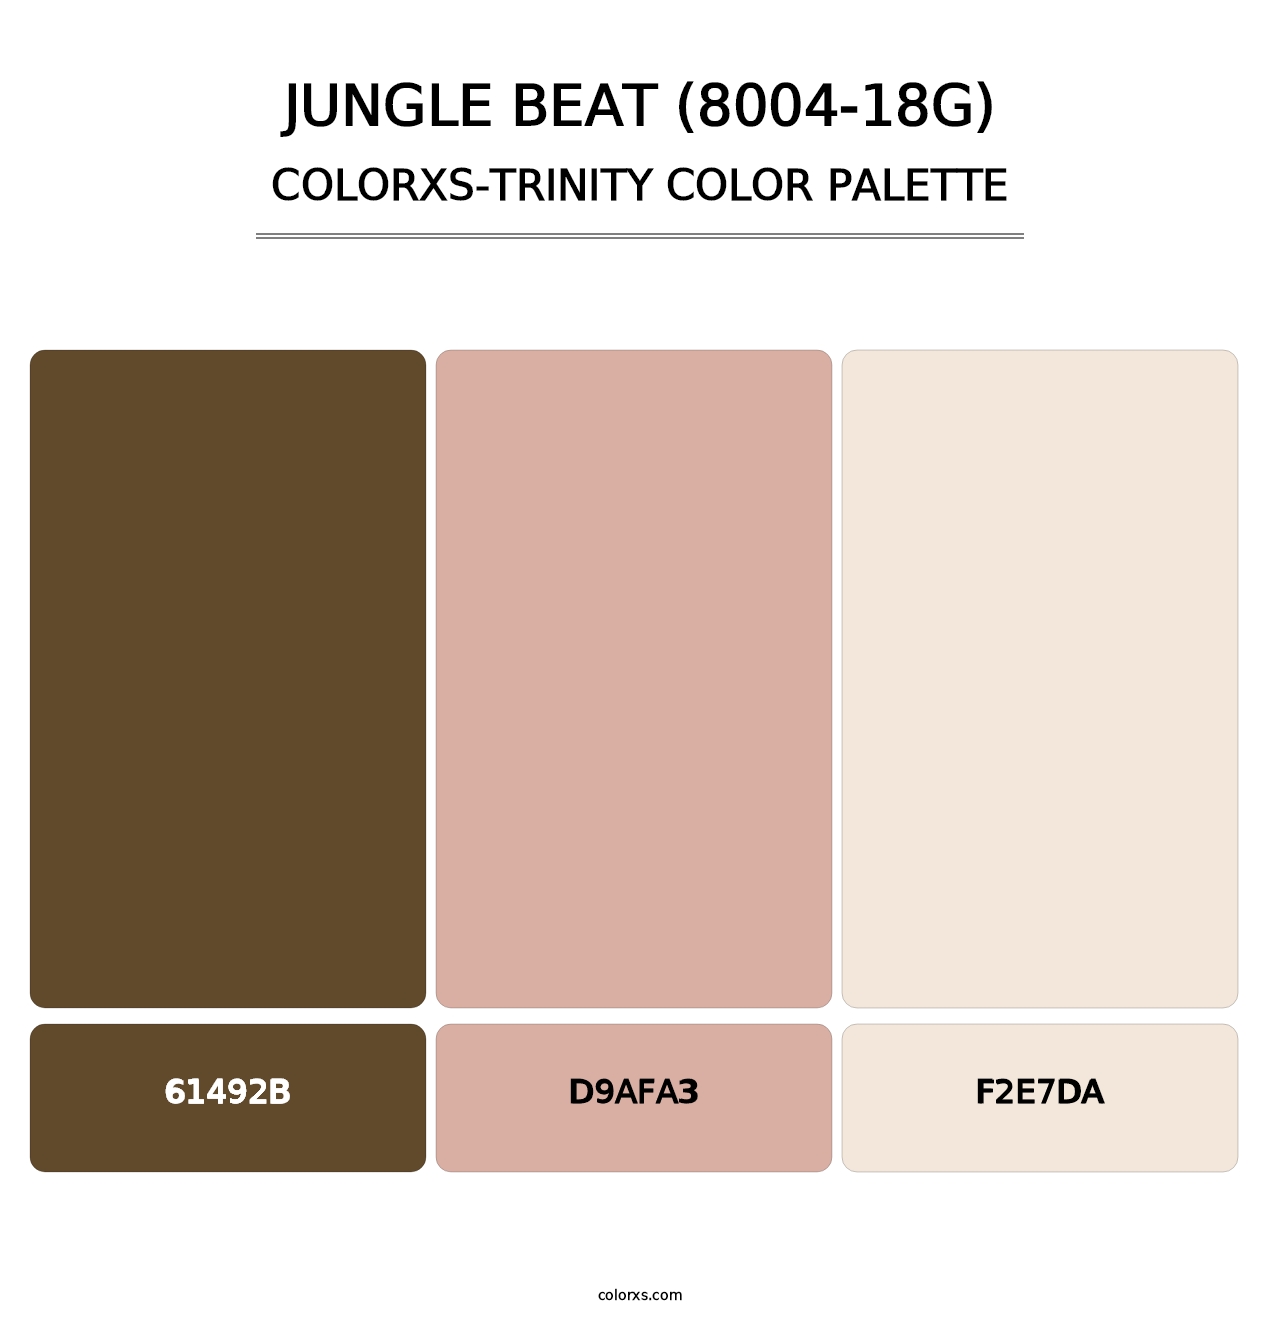 Jungle Beat (8004-18G) - Colorxs Trinity Palette